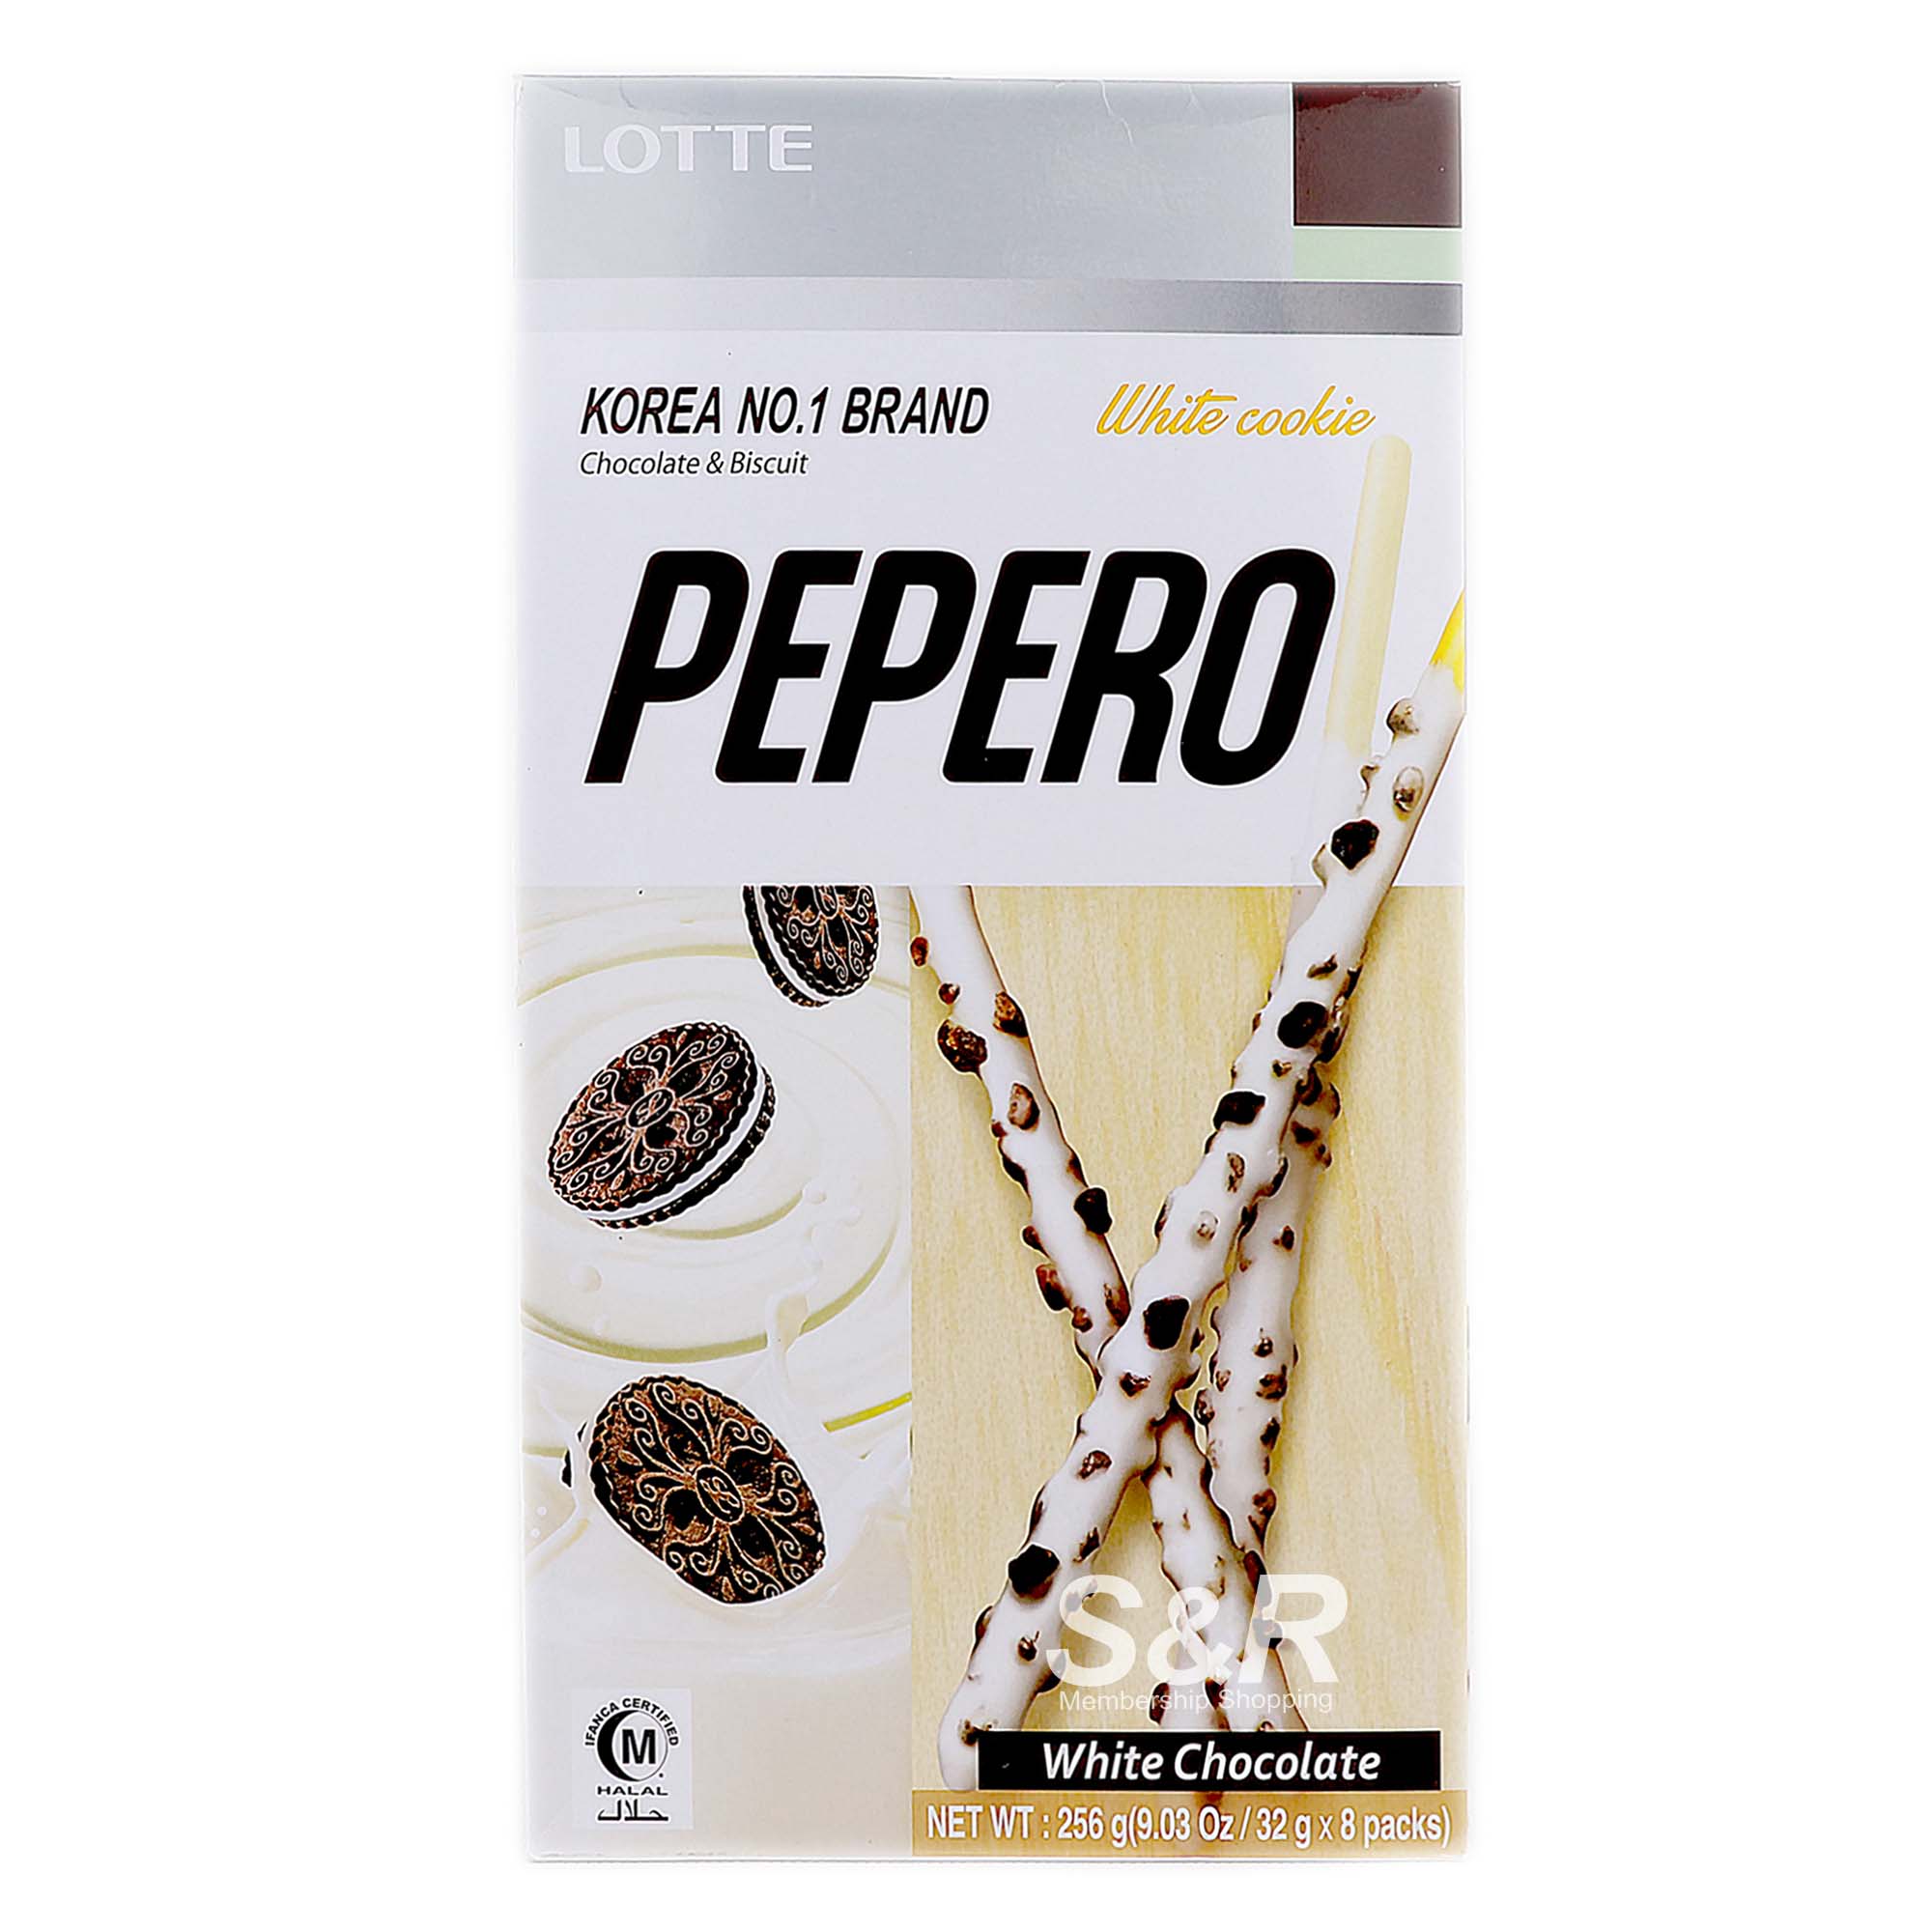 Lotte Pepero White Chocolate Cookie 8 packs